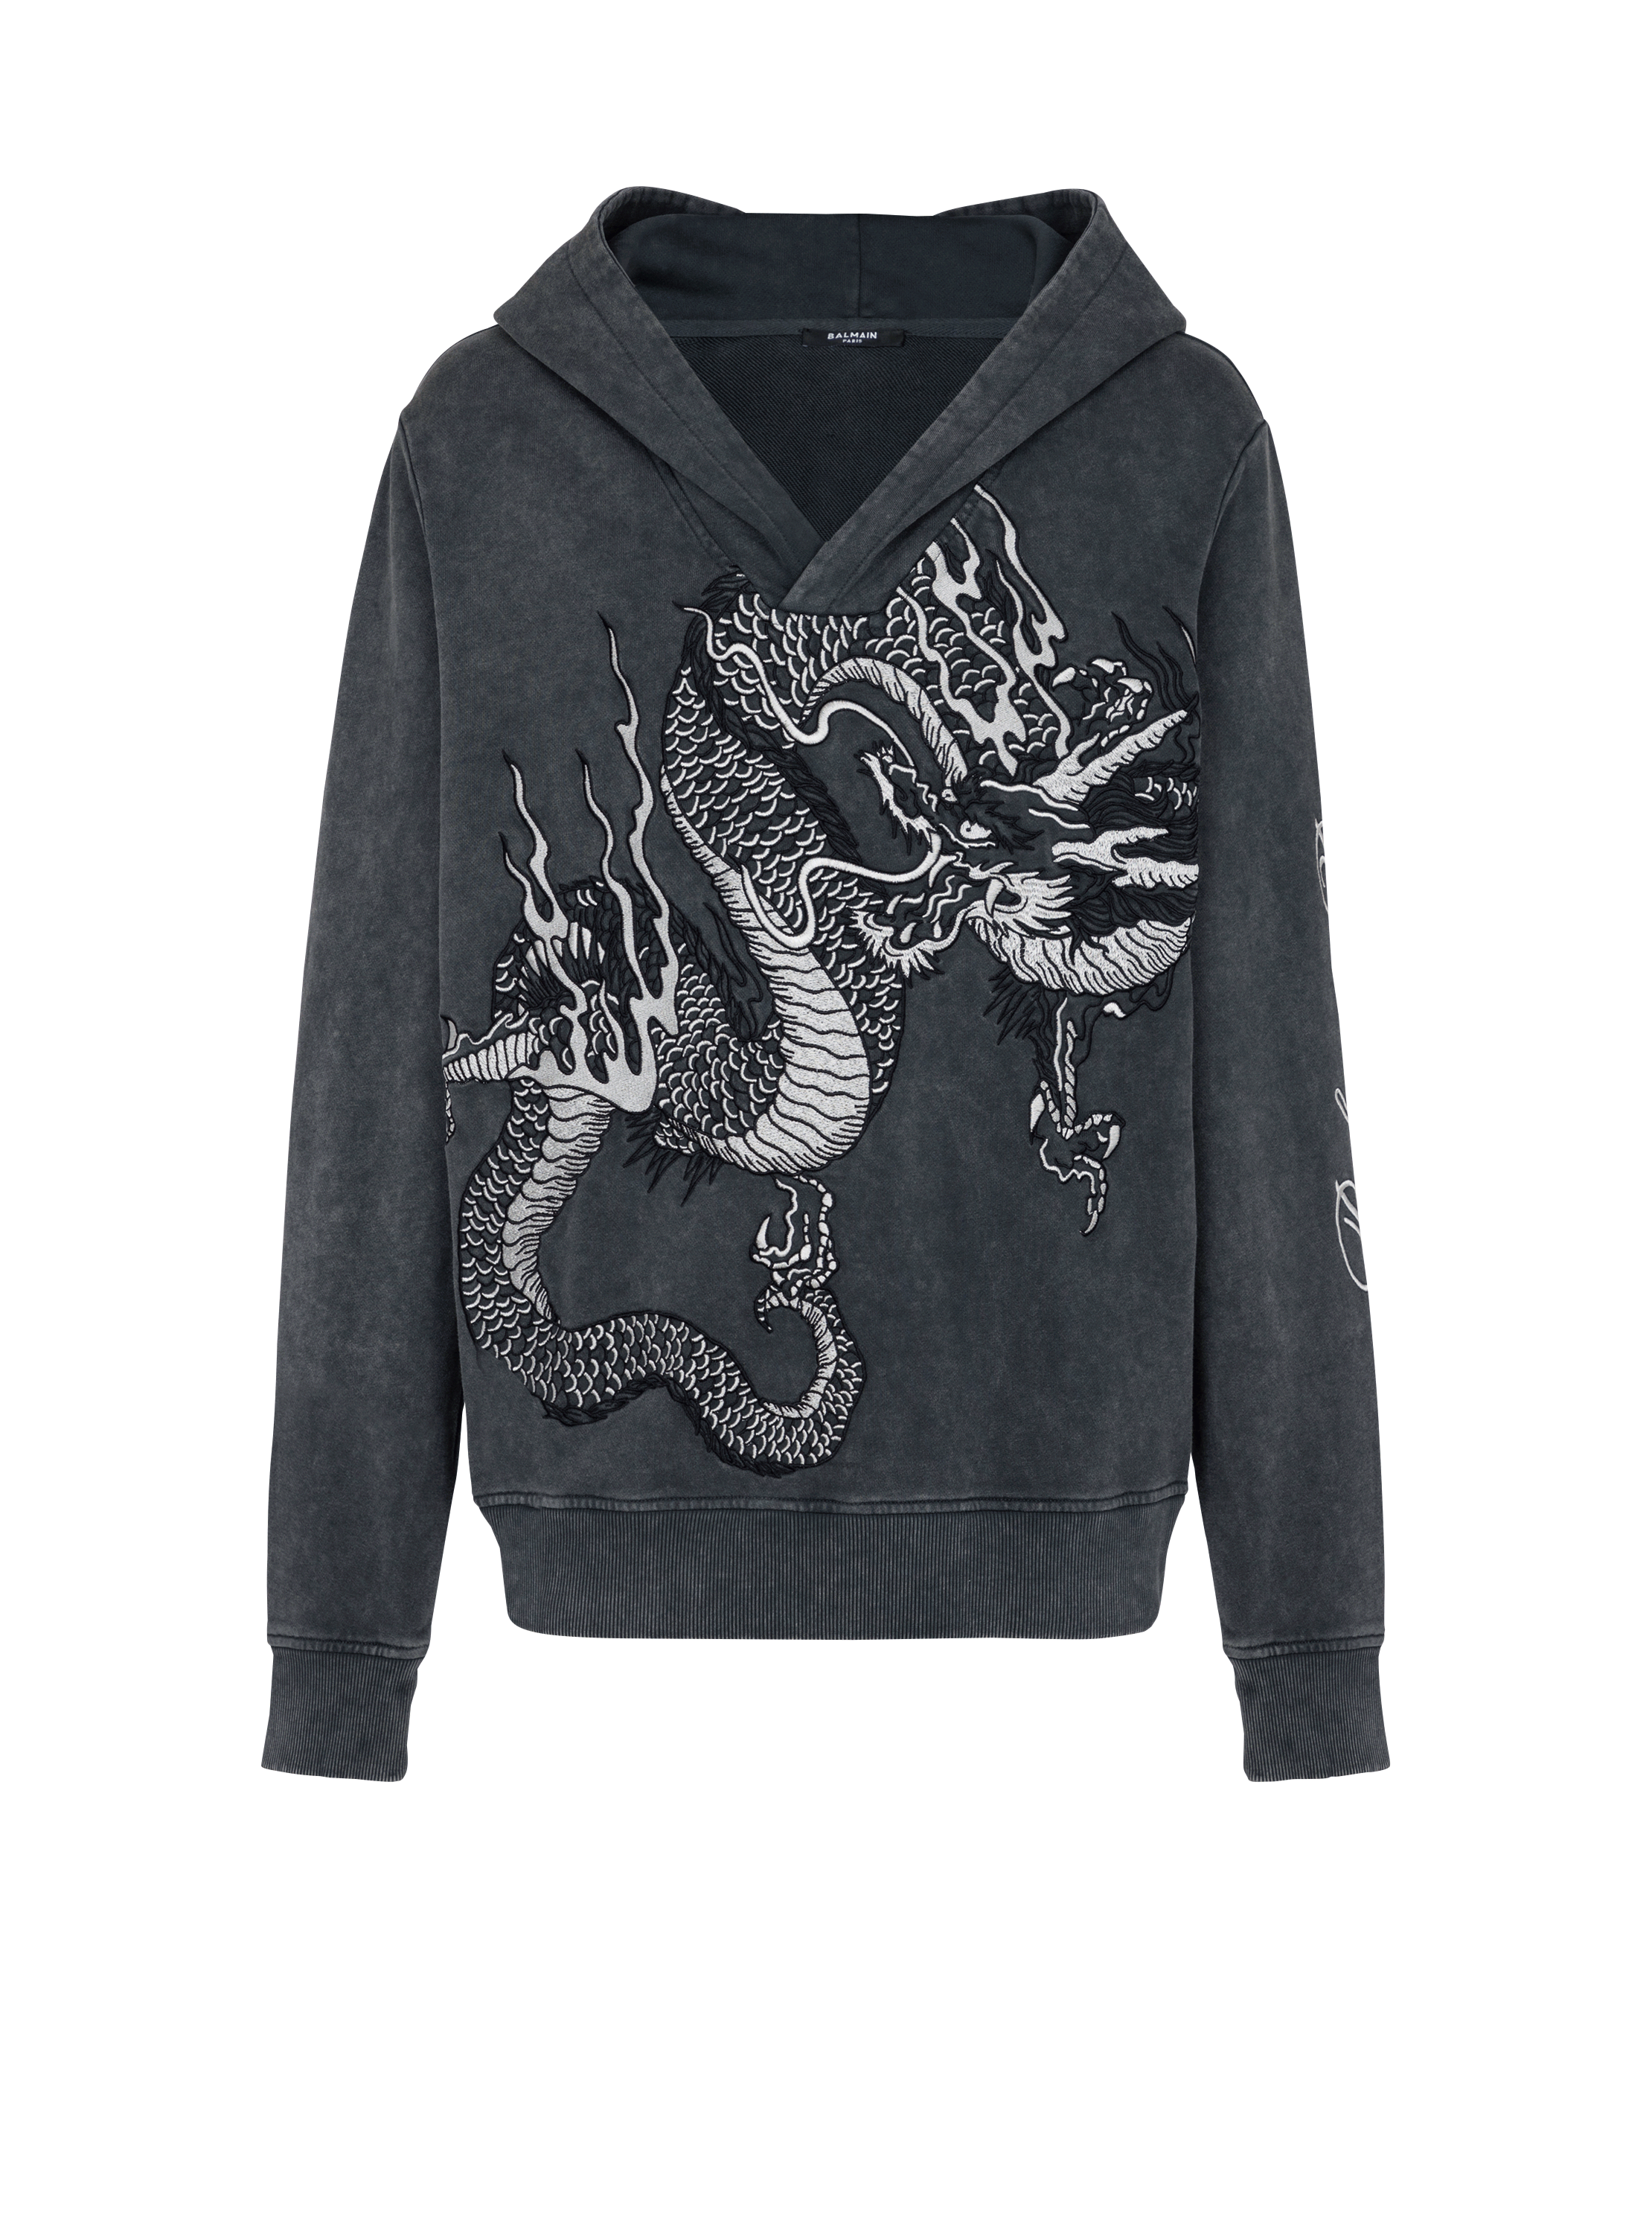 Dragon embroidered sweatshirt, grey, hi-res